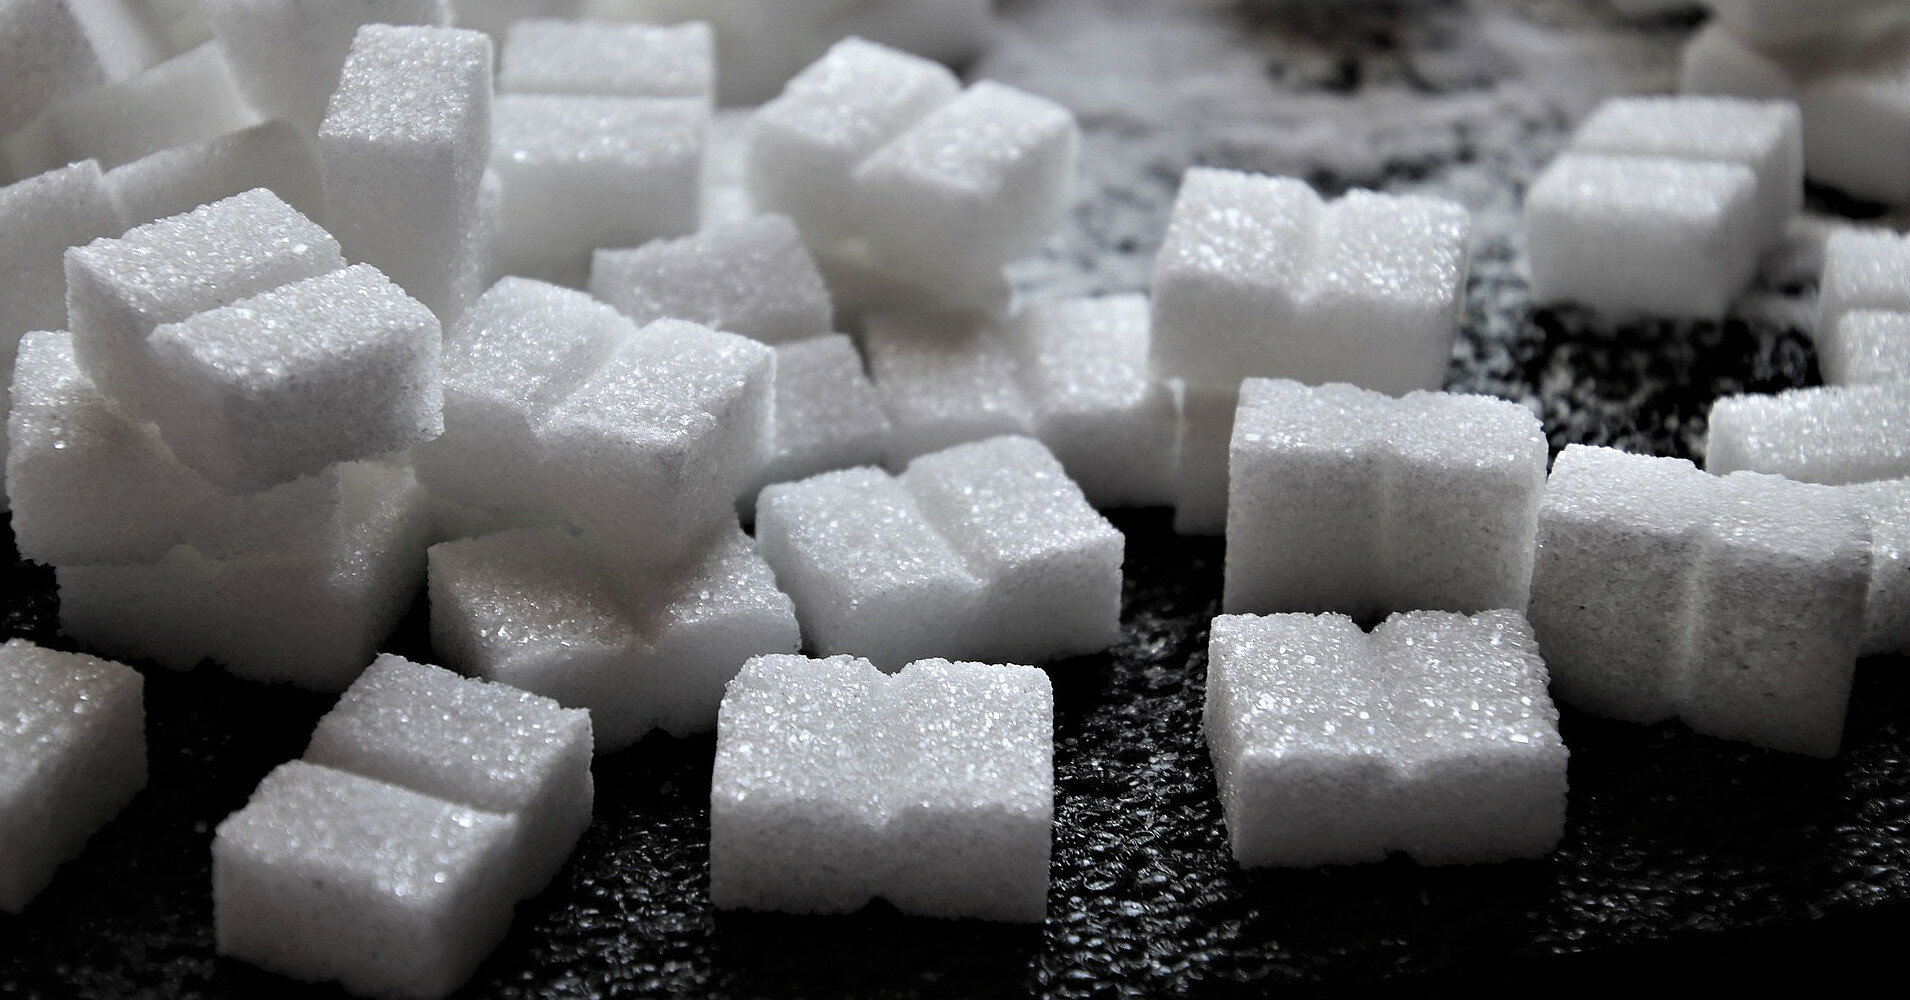 В Украине снова рекордно подорожает сахар